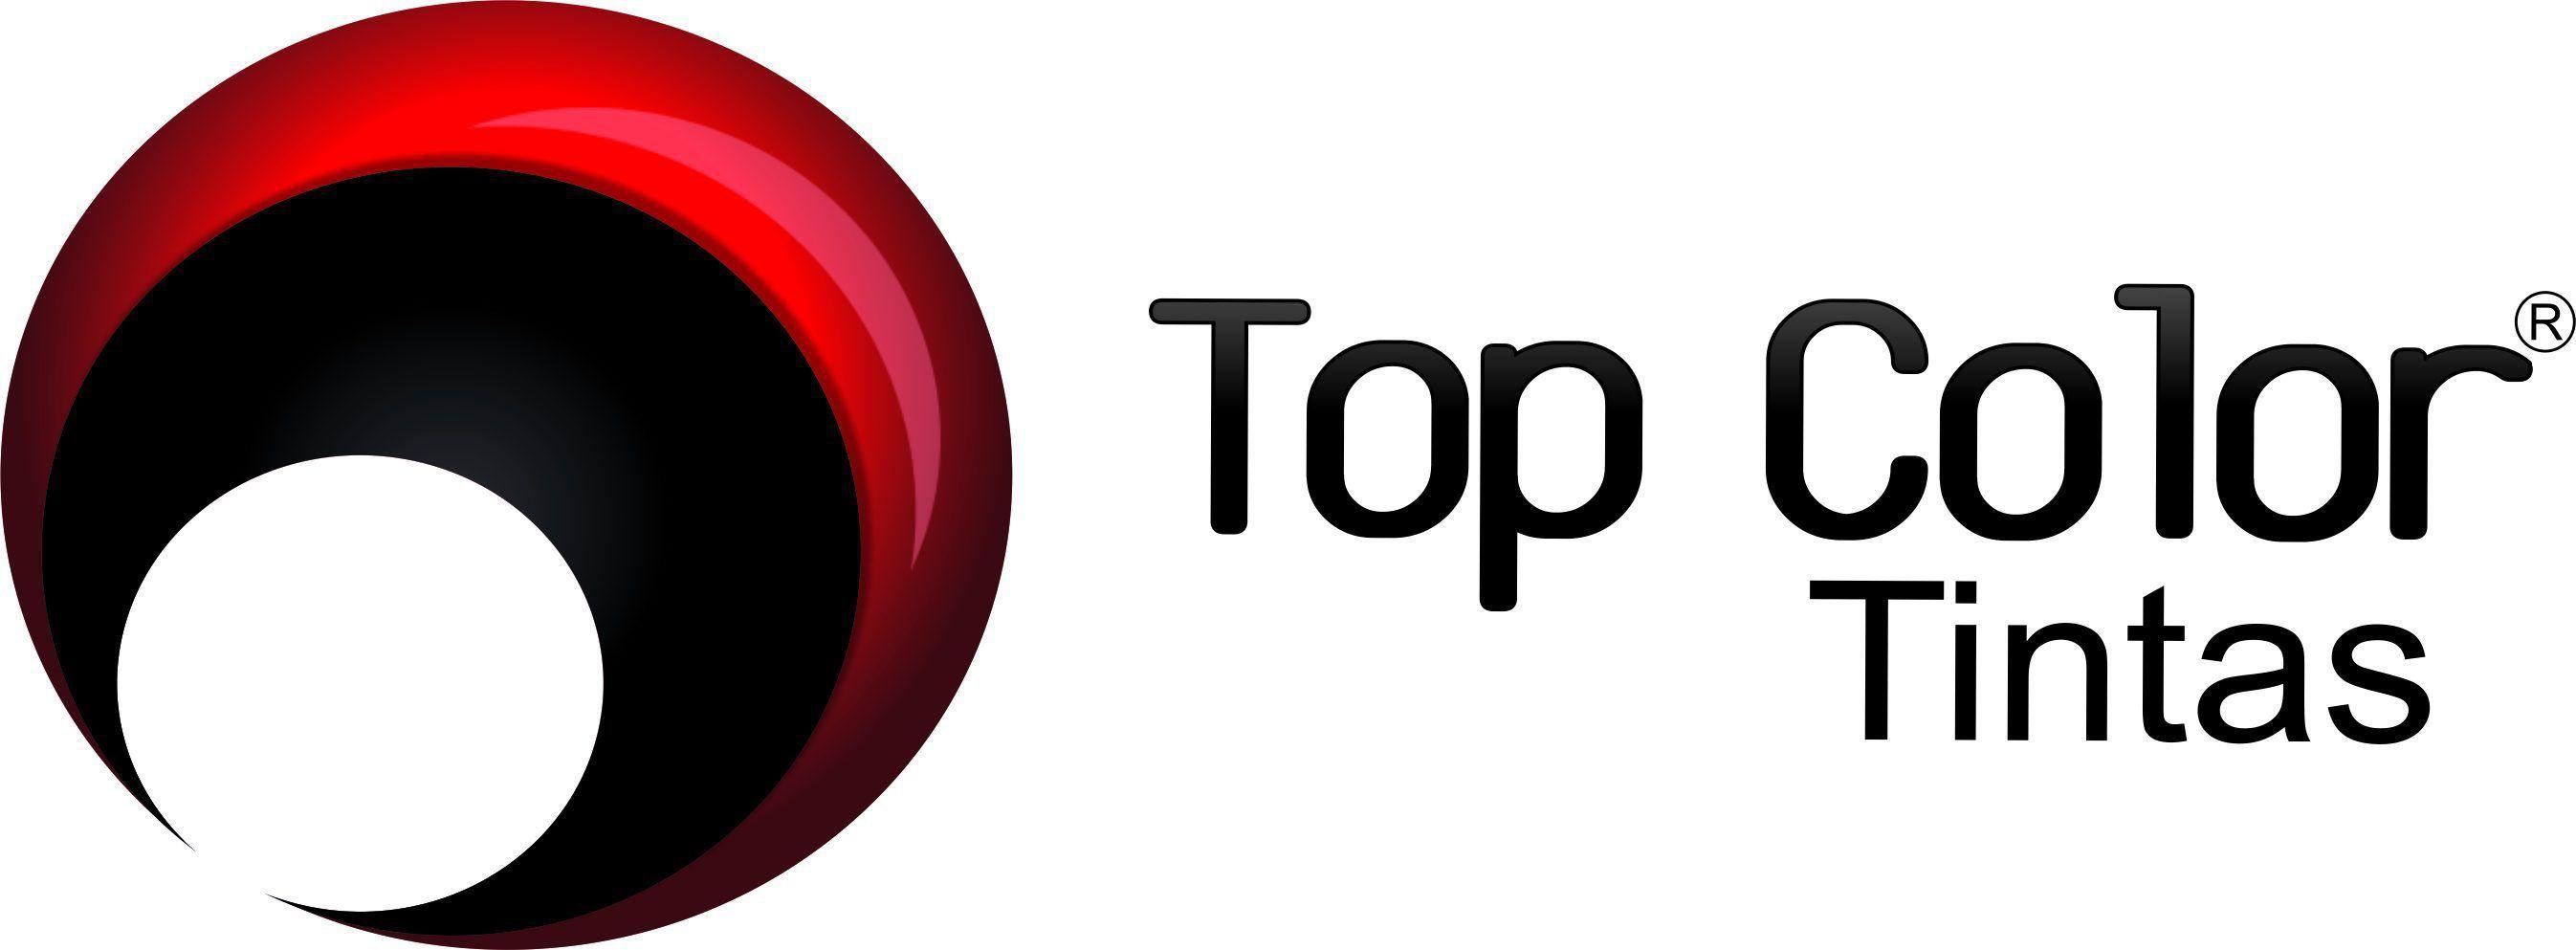 Top Colors for Logo - Whatsapp da fábrica 11 97459-1441